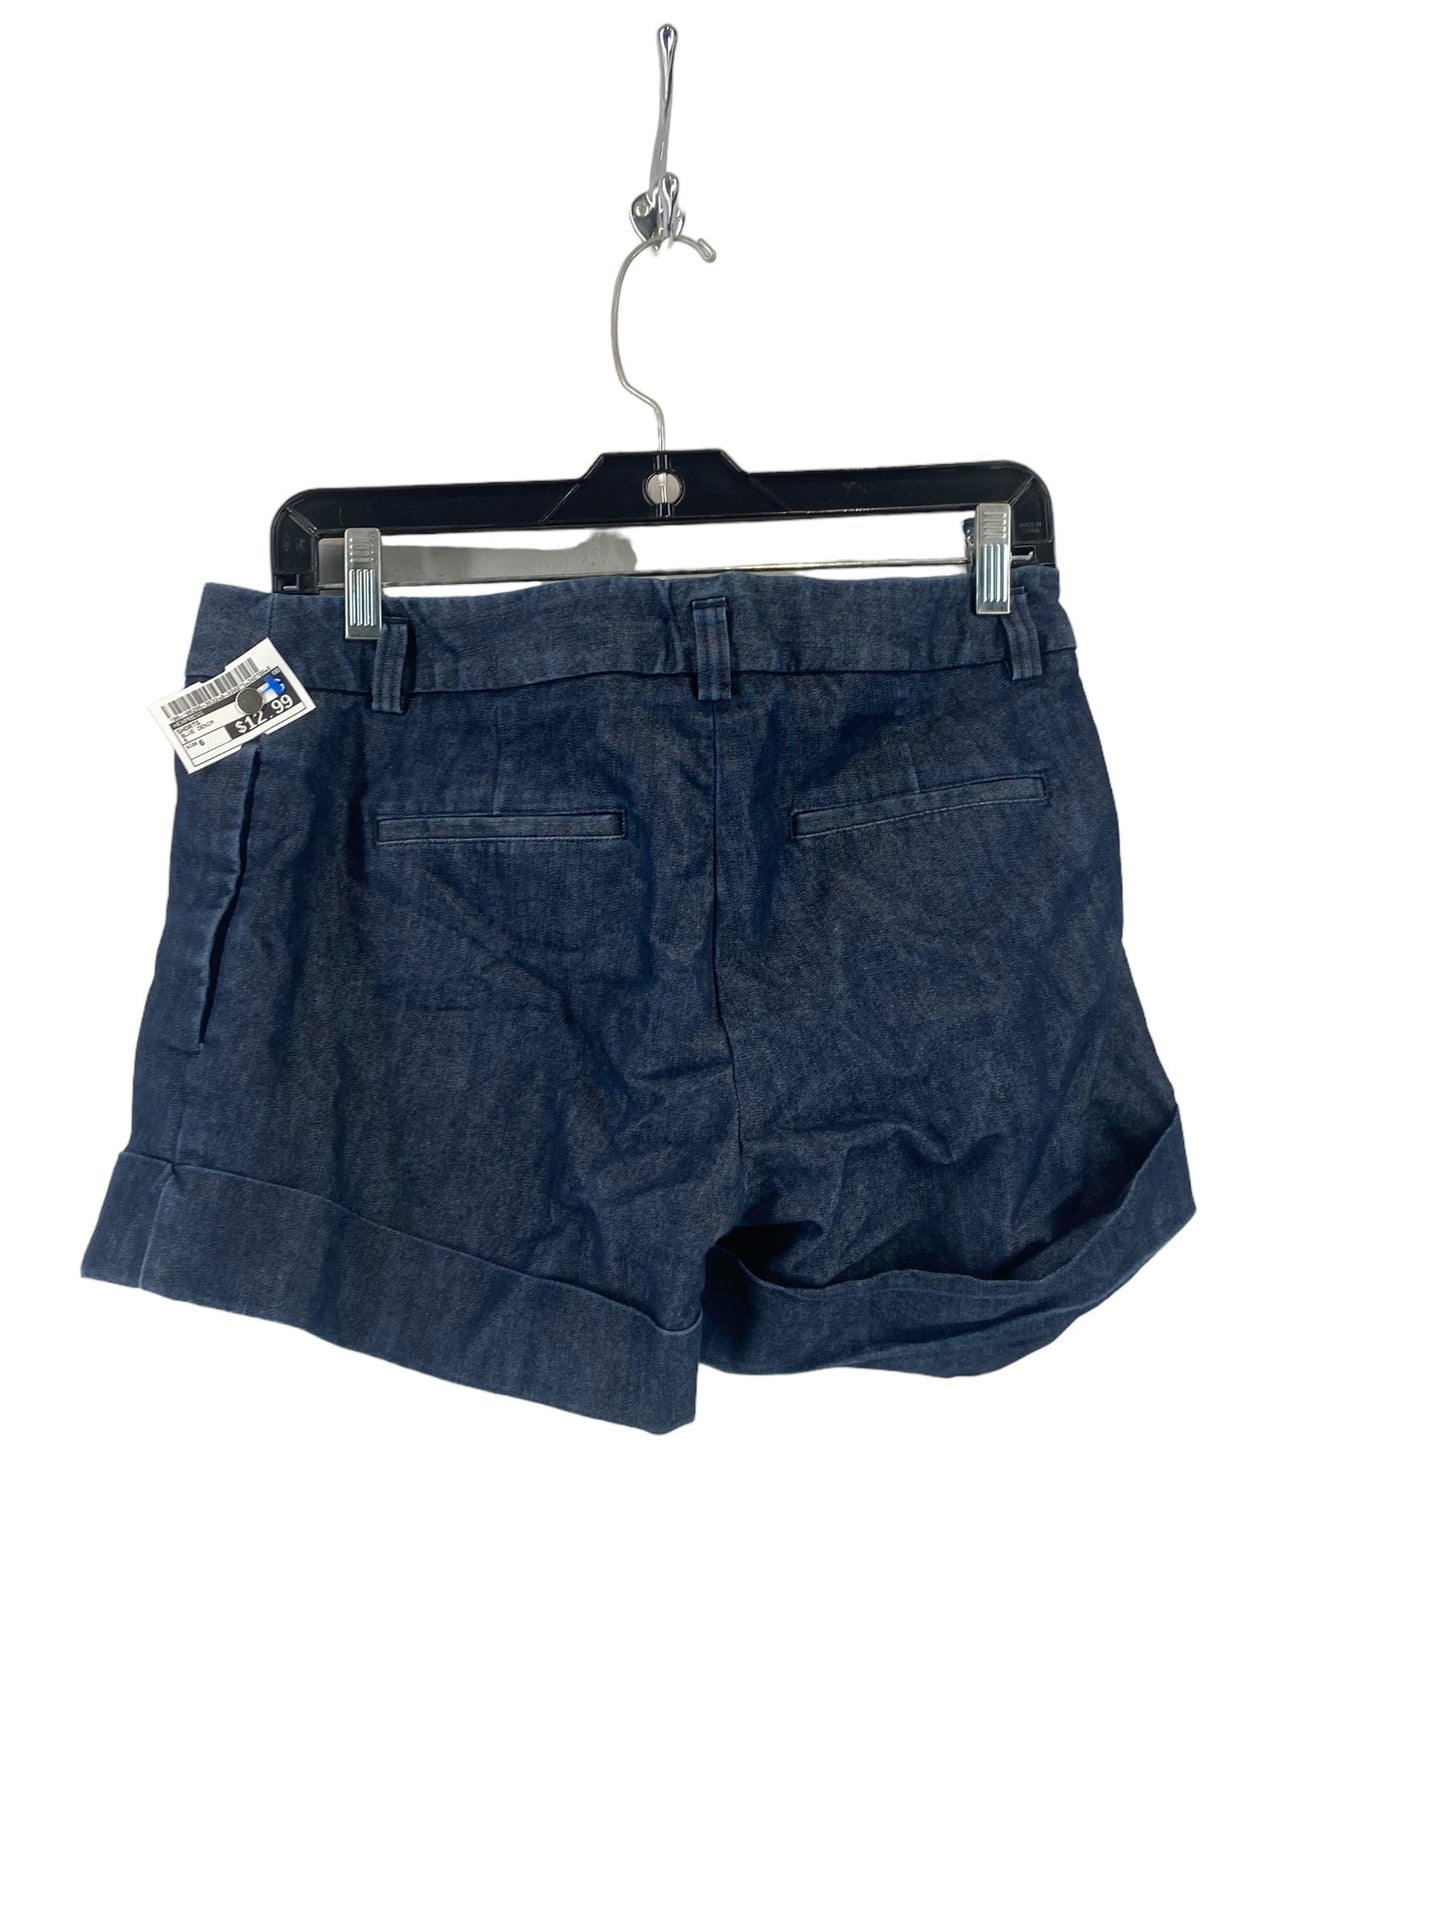 Blue Denim Shorts Express, Size 6